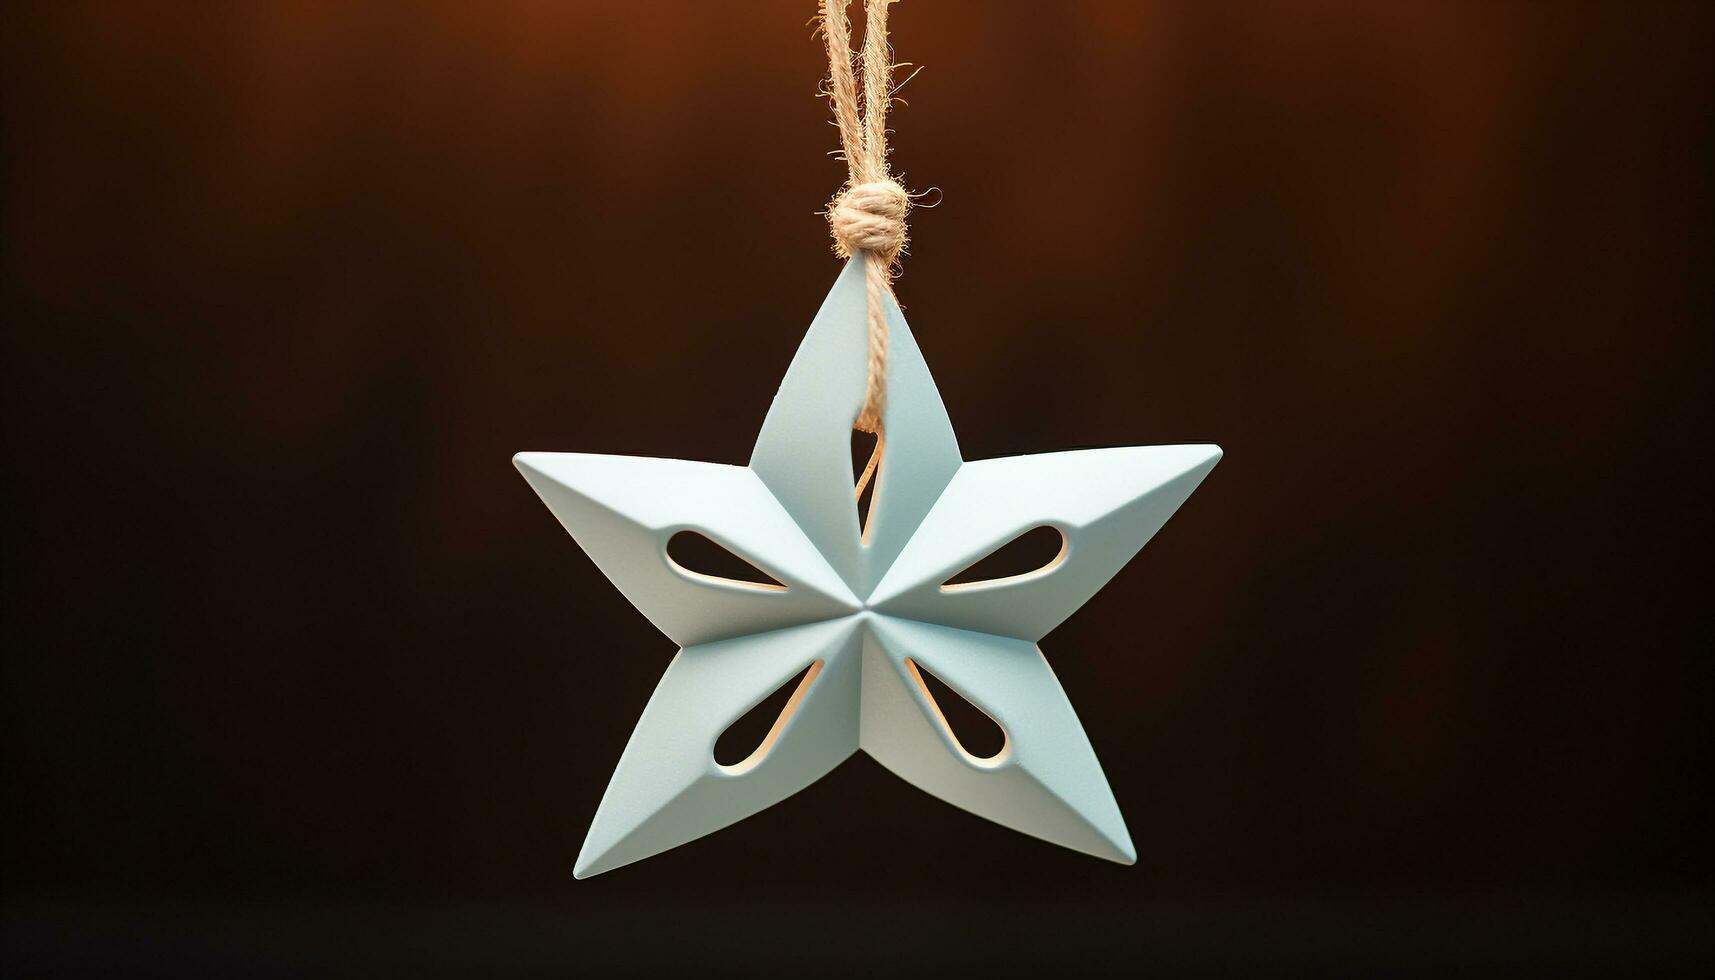 Christmas ornament hanging, shiny star shape, elegant gold decoration generated by AI photo